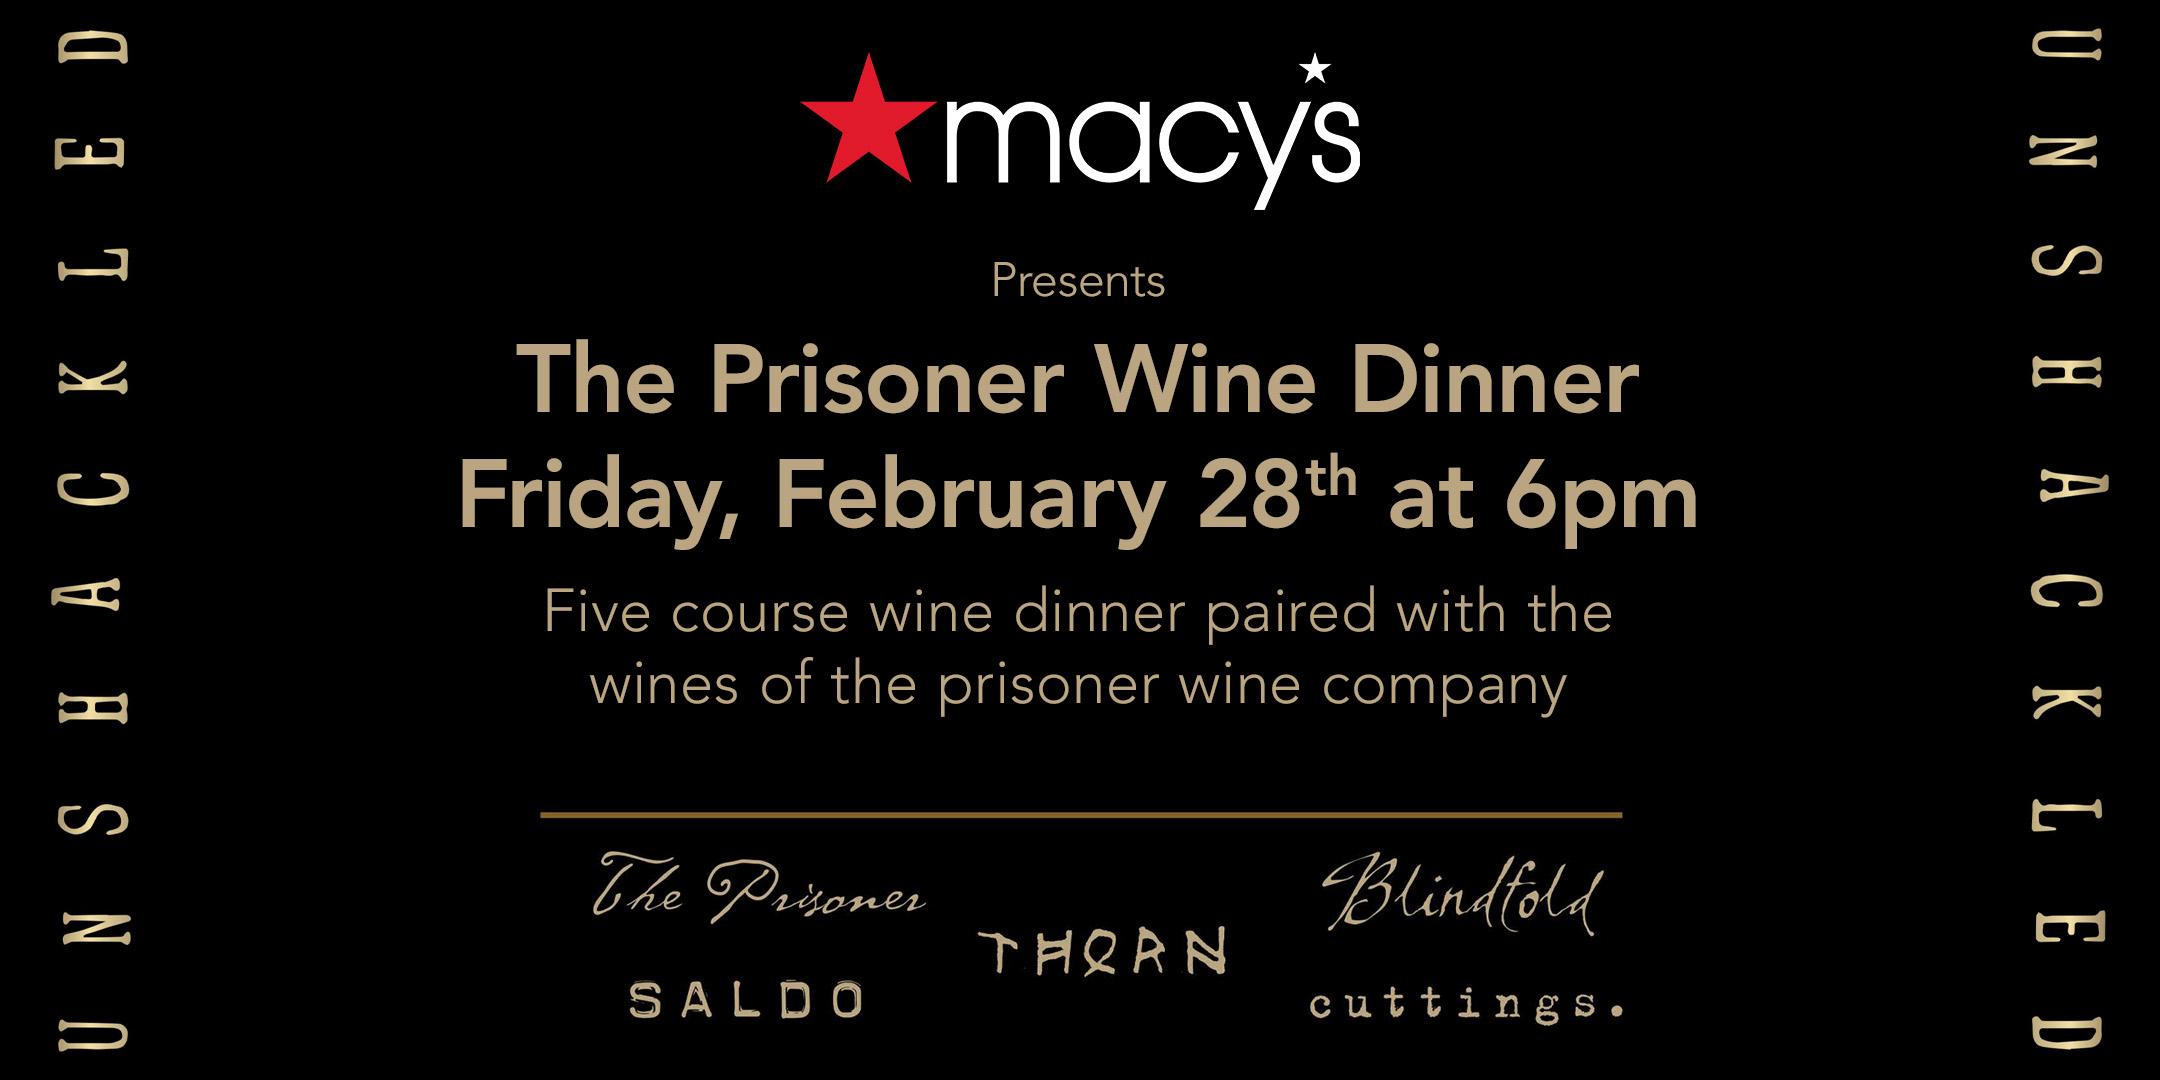 Macy's Presents: The Prisoner Wine Dinner